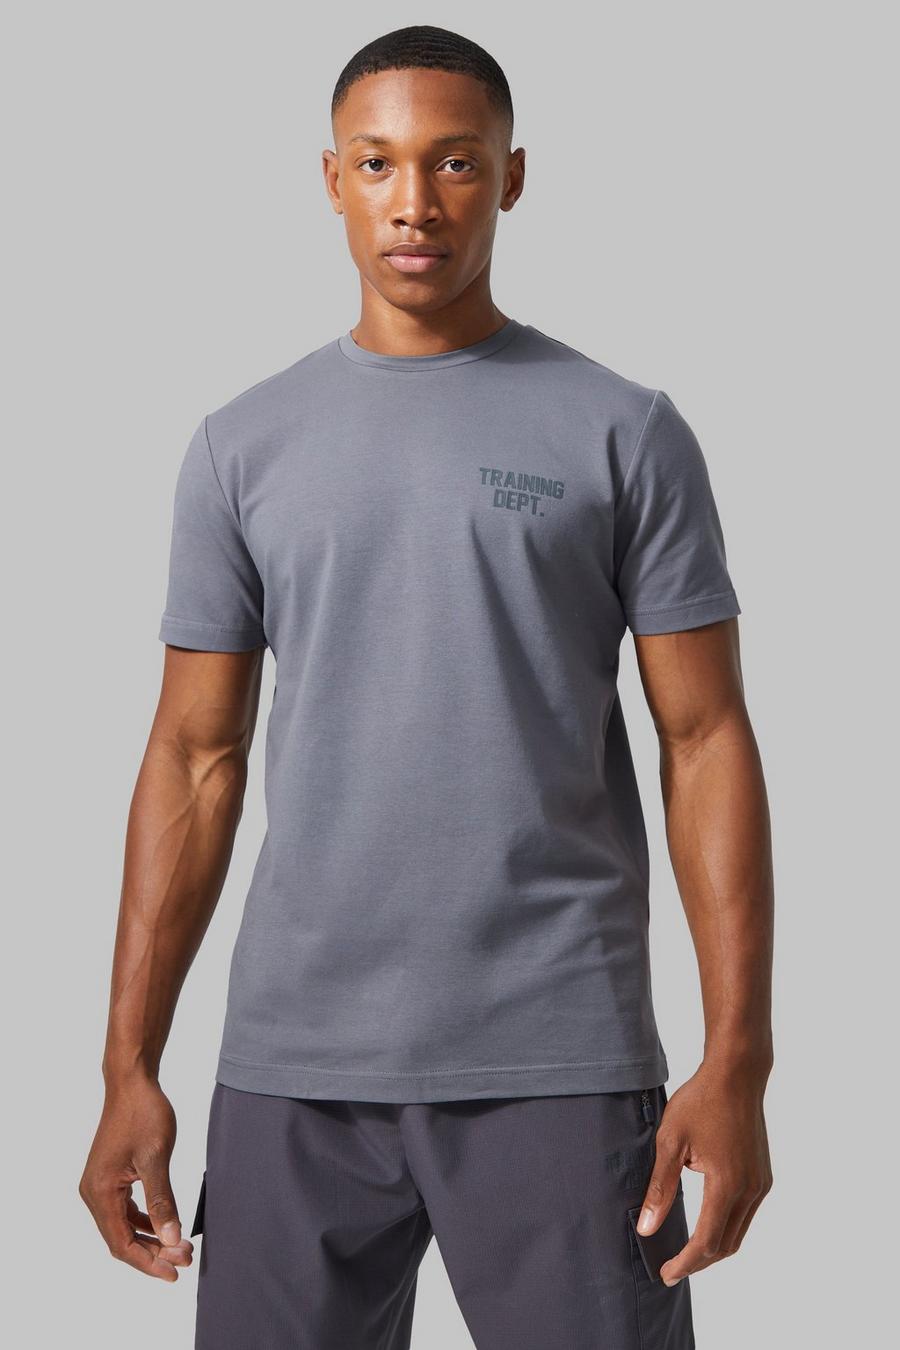 Camiseta Active ajustada resistente Training Dept, Charcoal image number 1